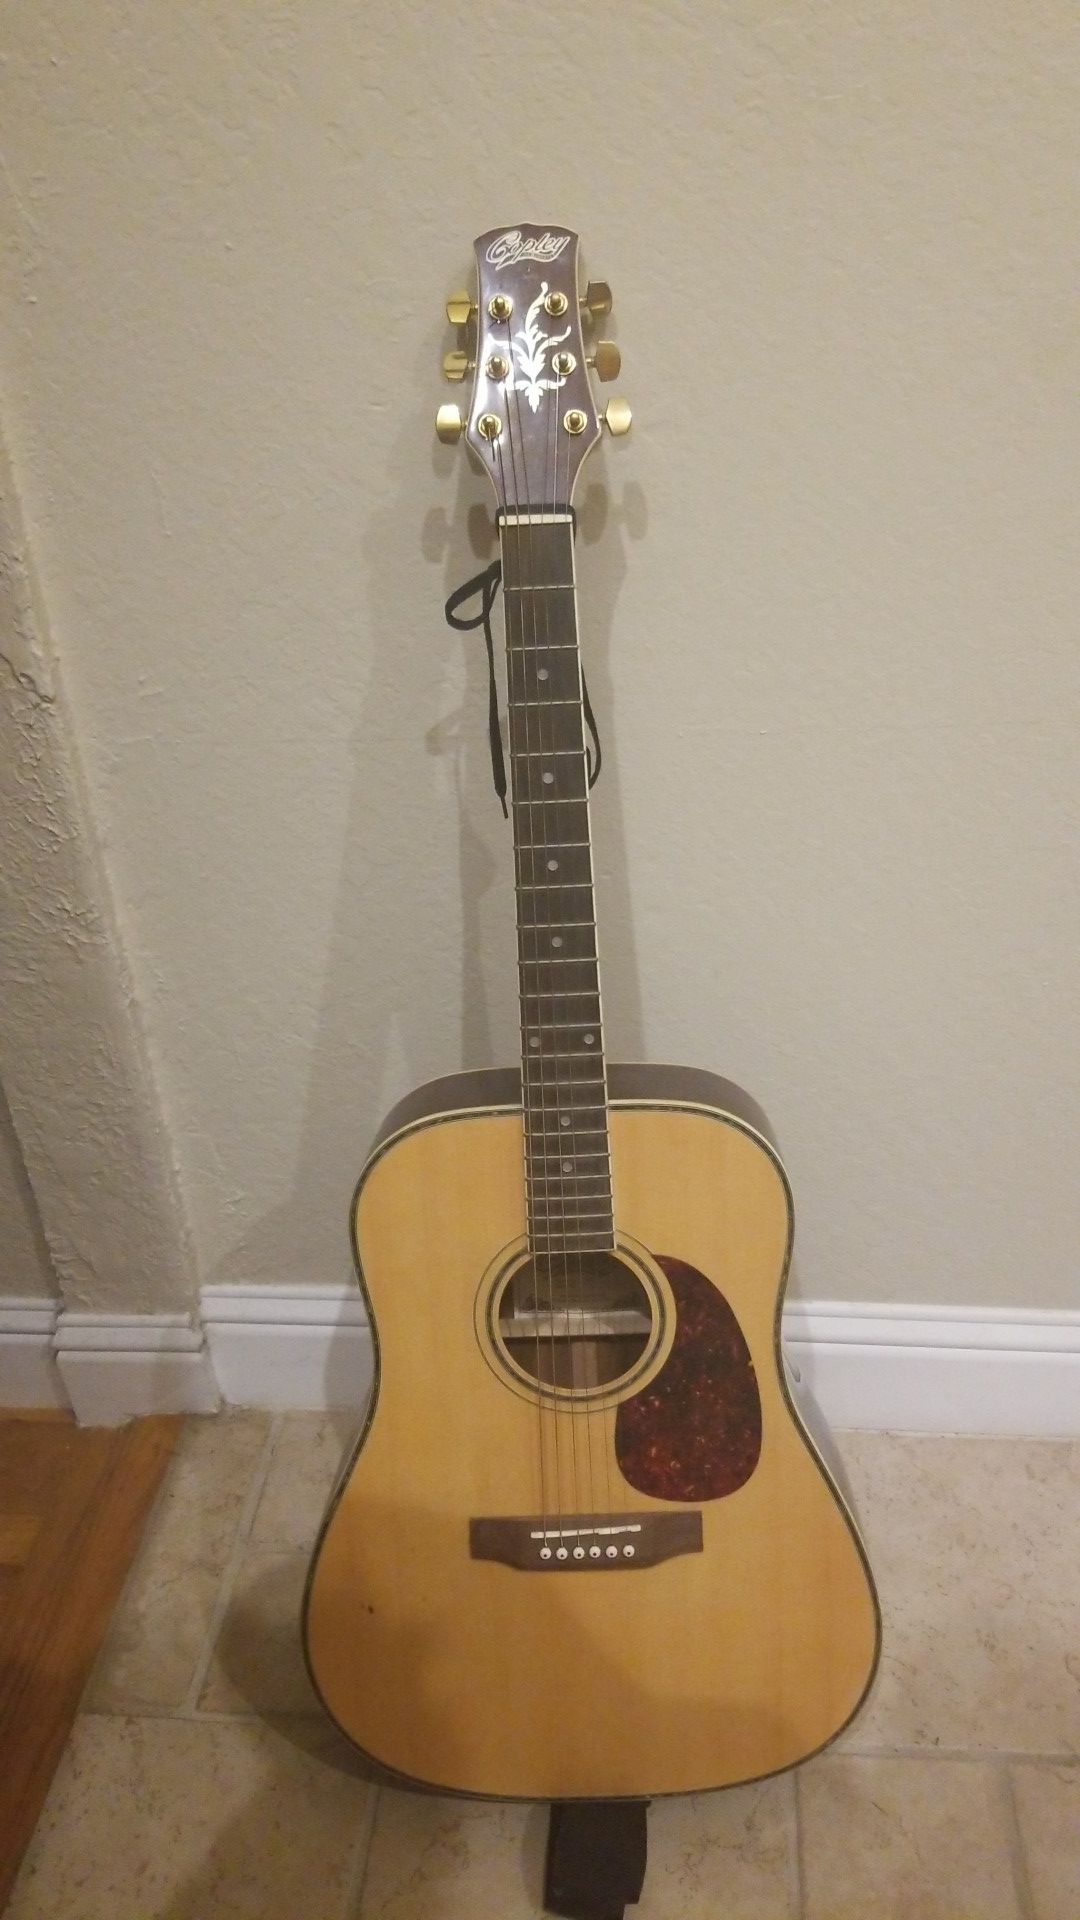 Copley steel string acoustic guitar